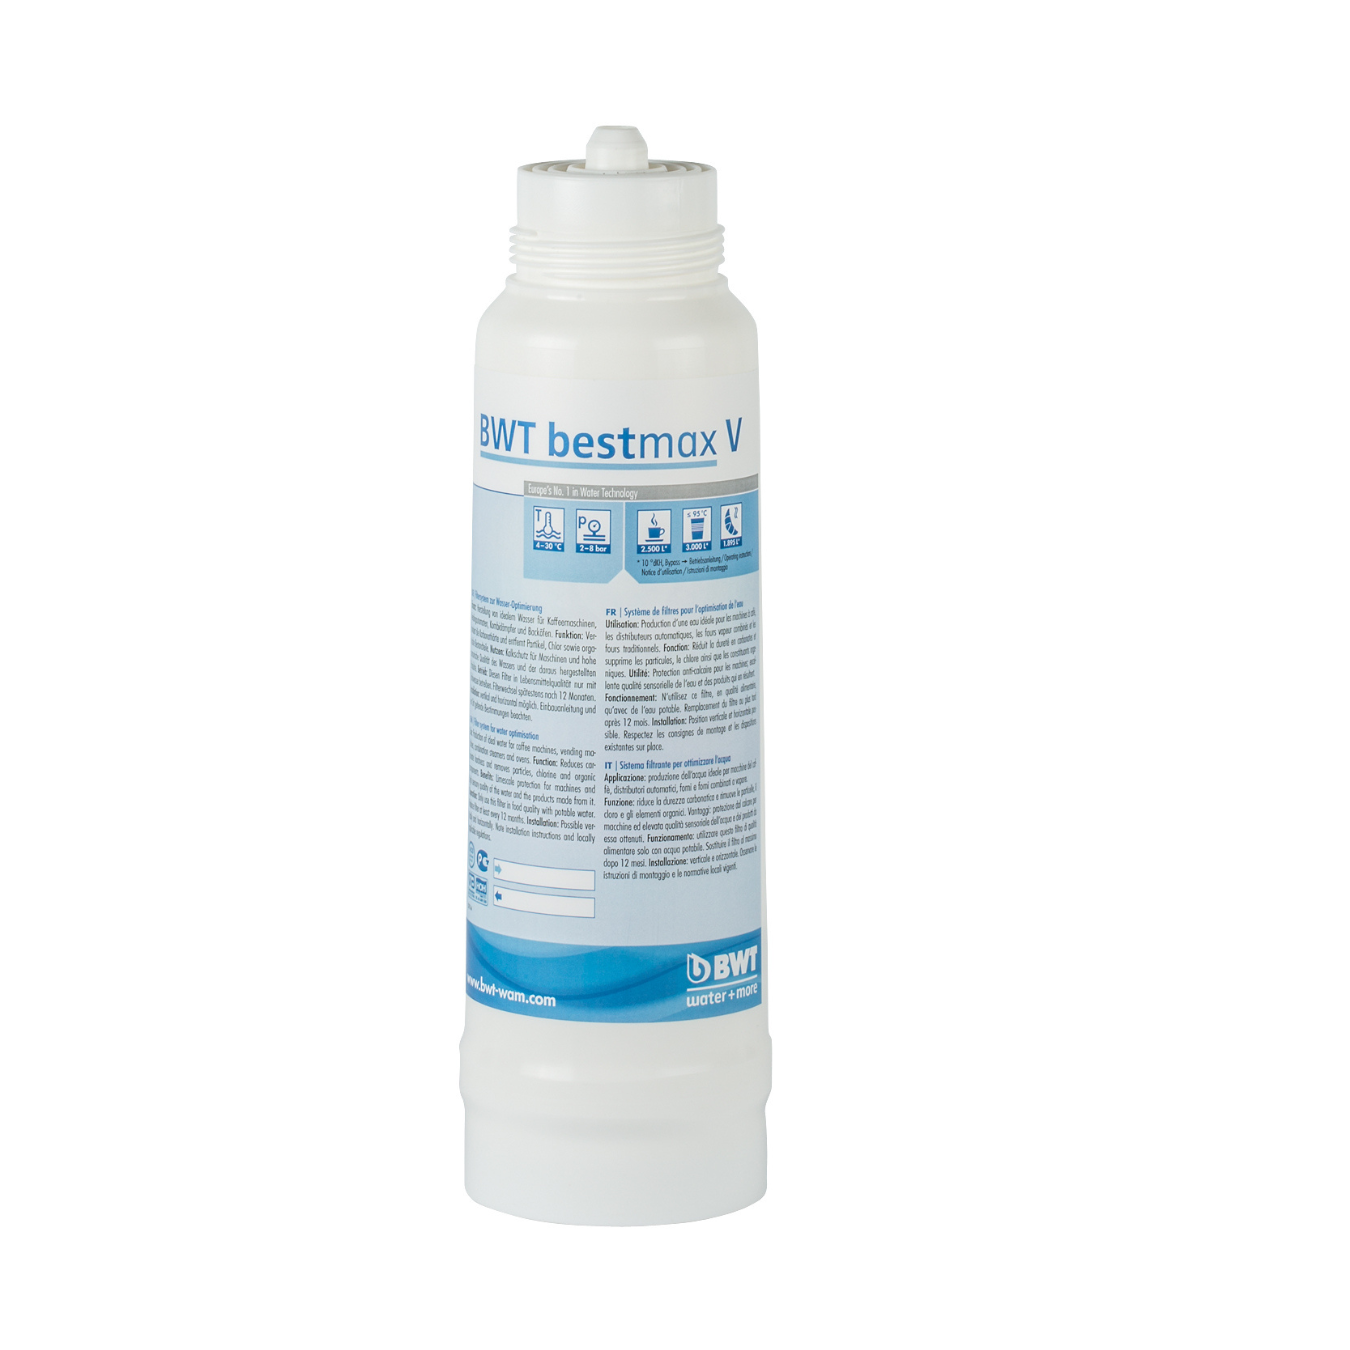 BWT bestmax V Water Kit With besthead FLEX & Aquameter